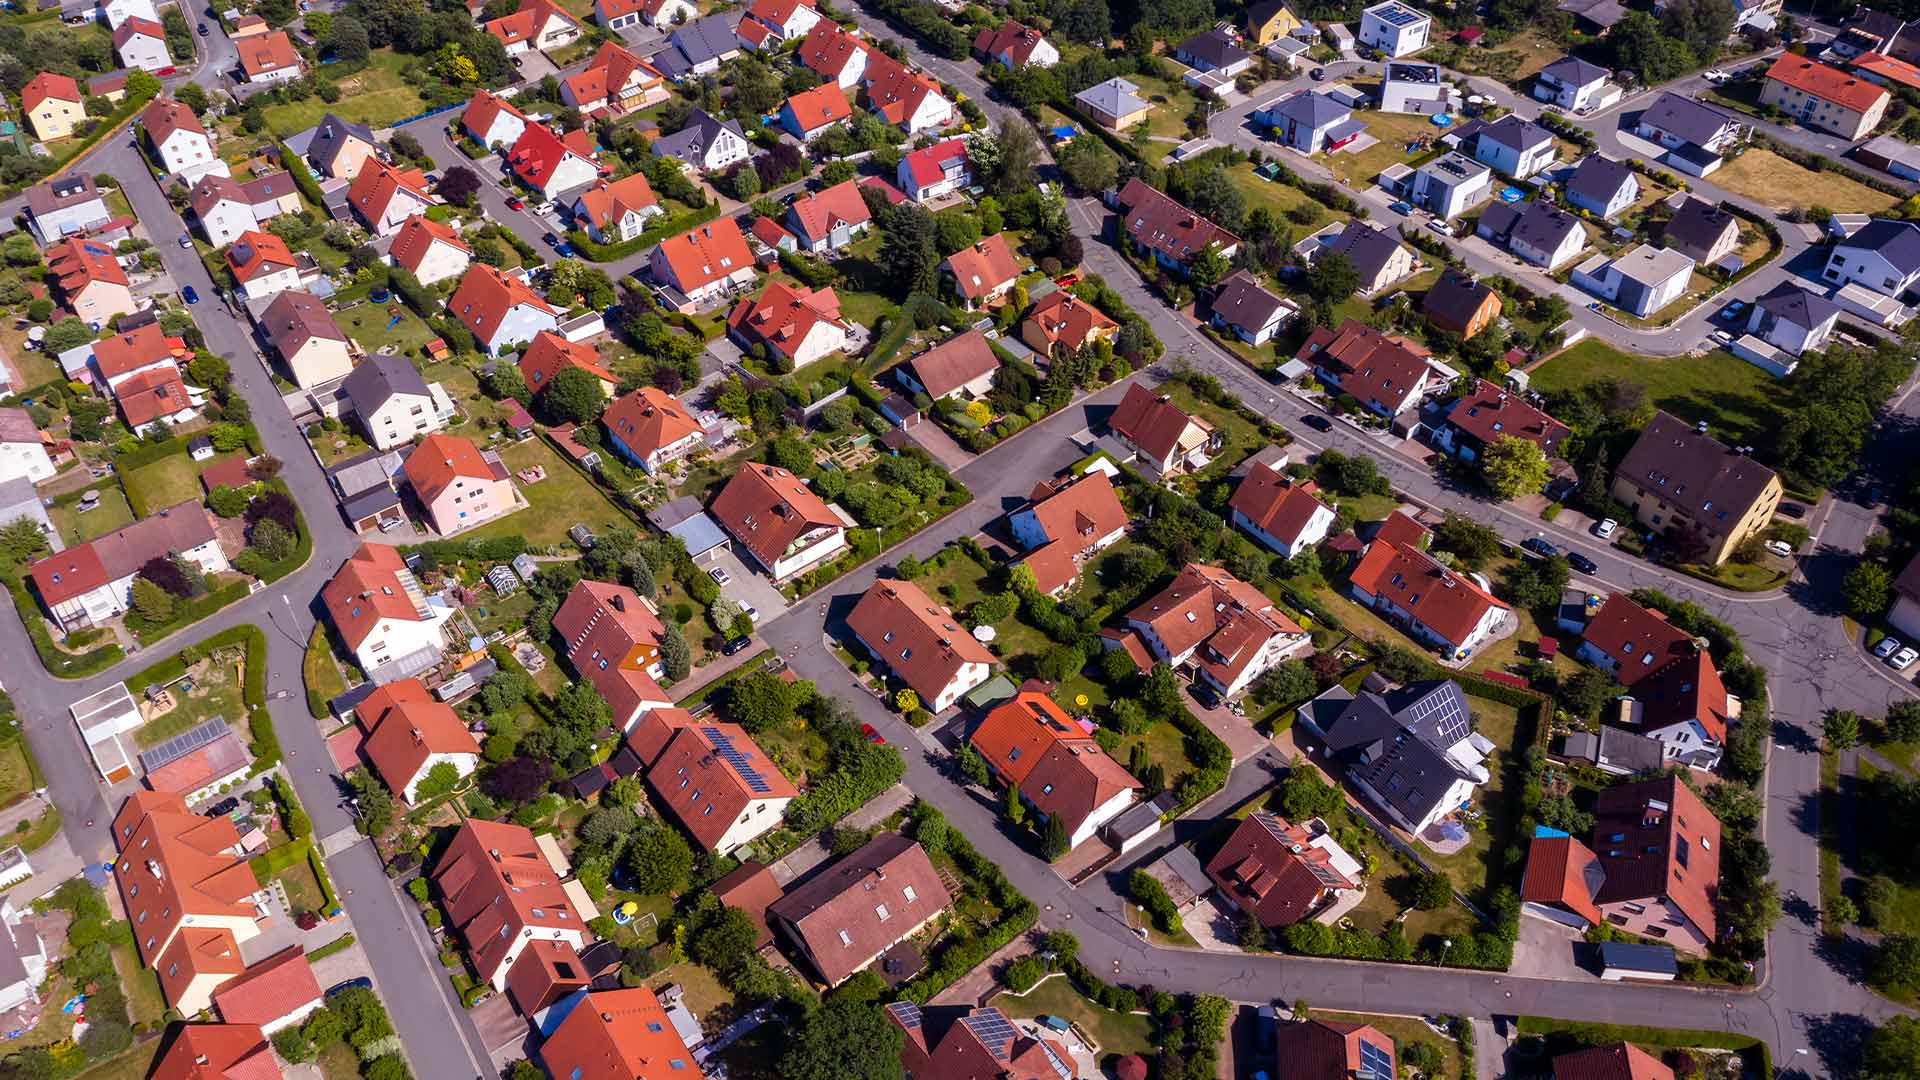 Will the housing market crash like 2008? (Podcast)